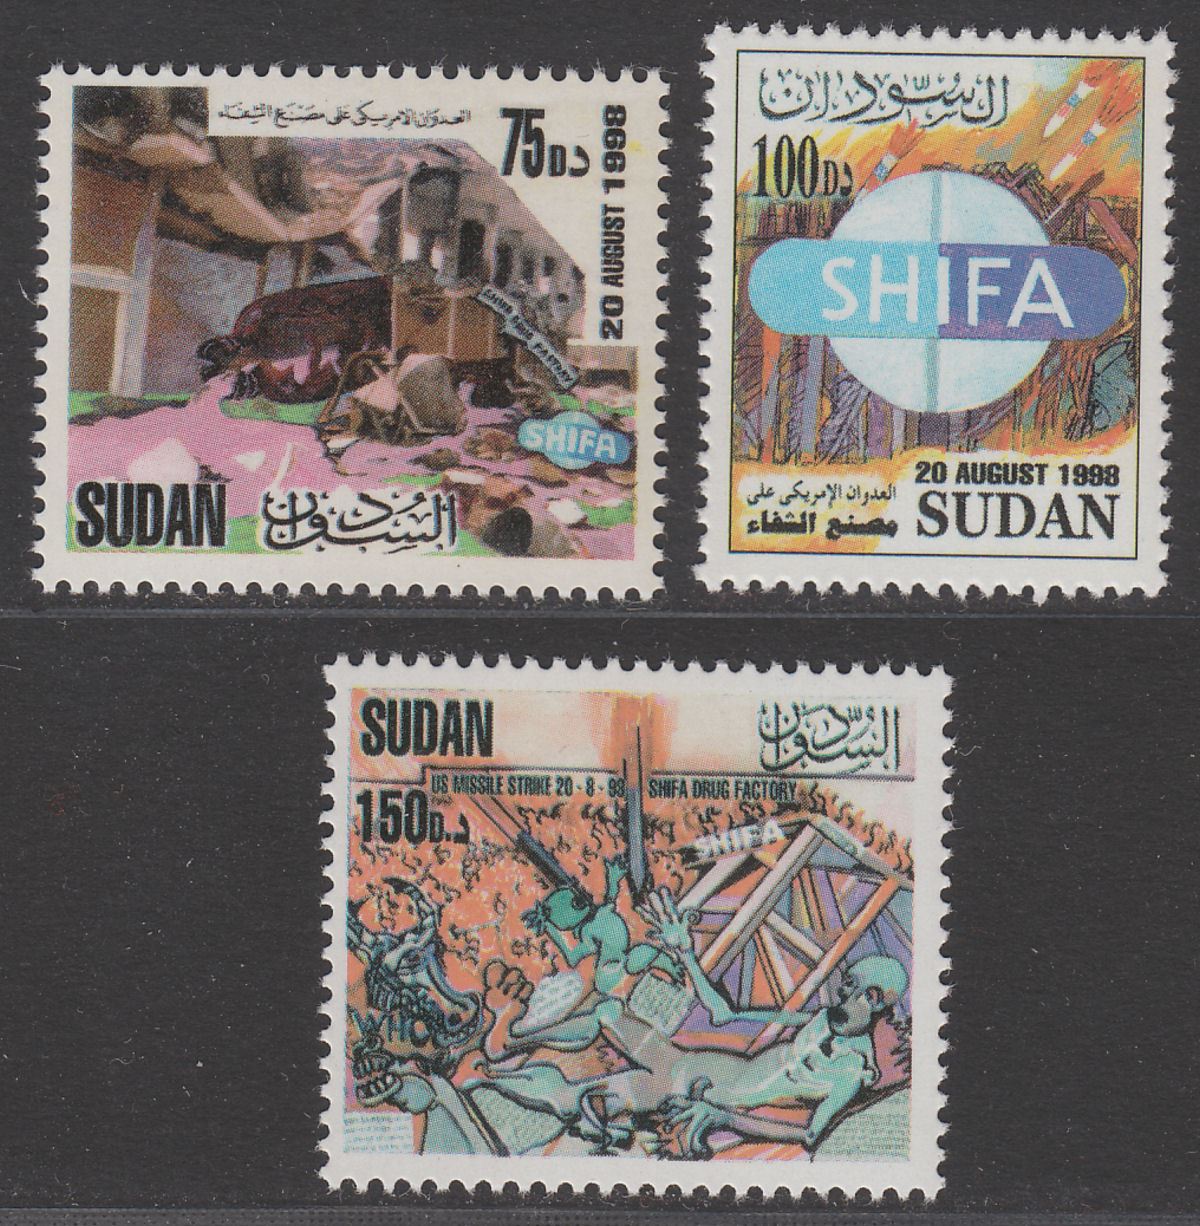 Sudan 1999 First Anniv of Bombing of Shifa Factory Set UM Mint SG584-586 cat £33